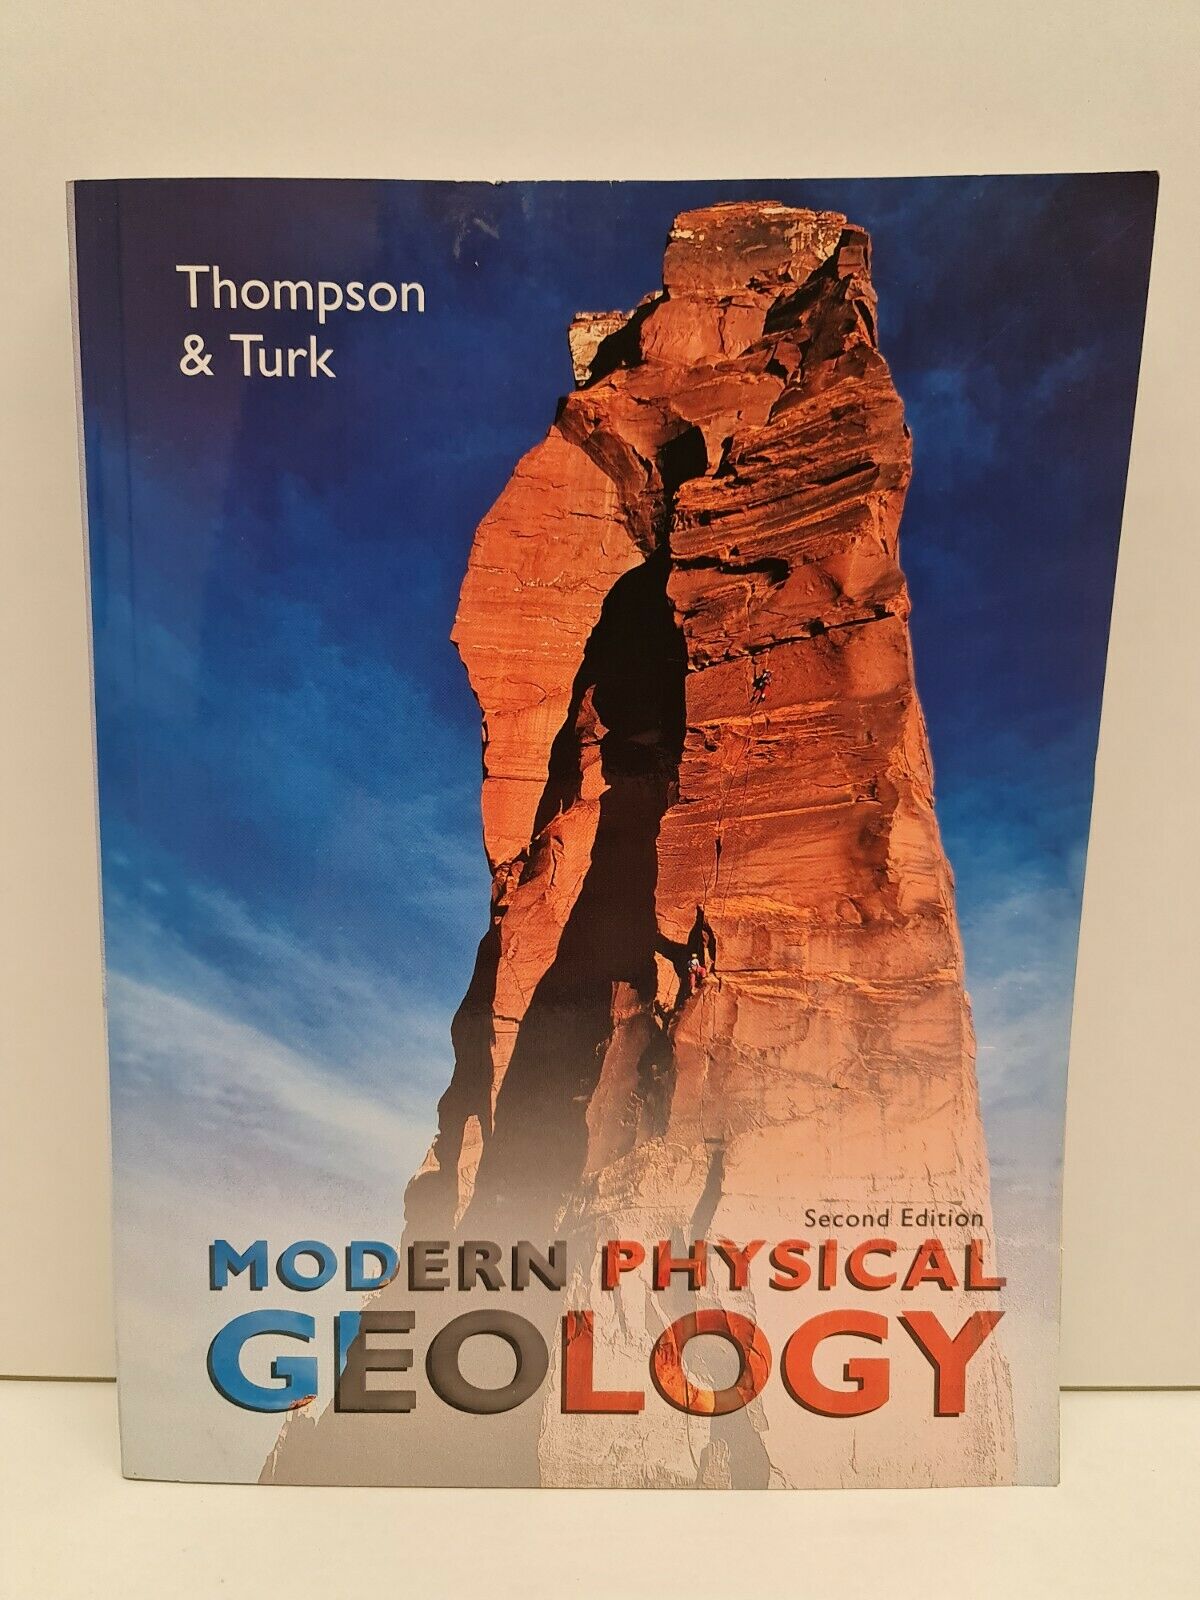 Modern Physical Geology by Thompson & TURK